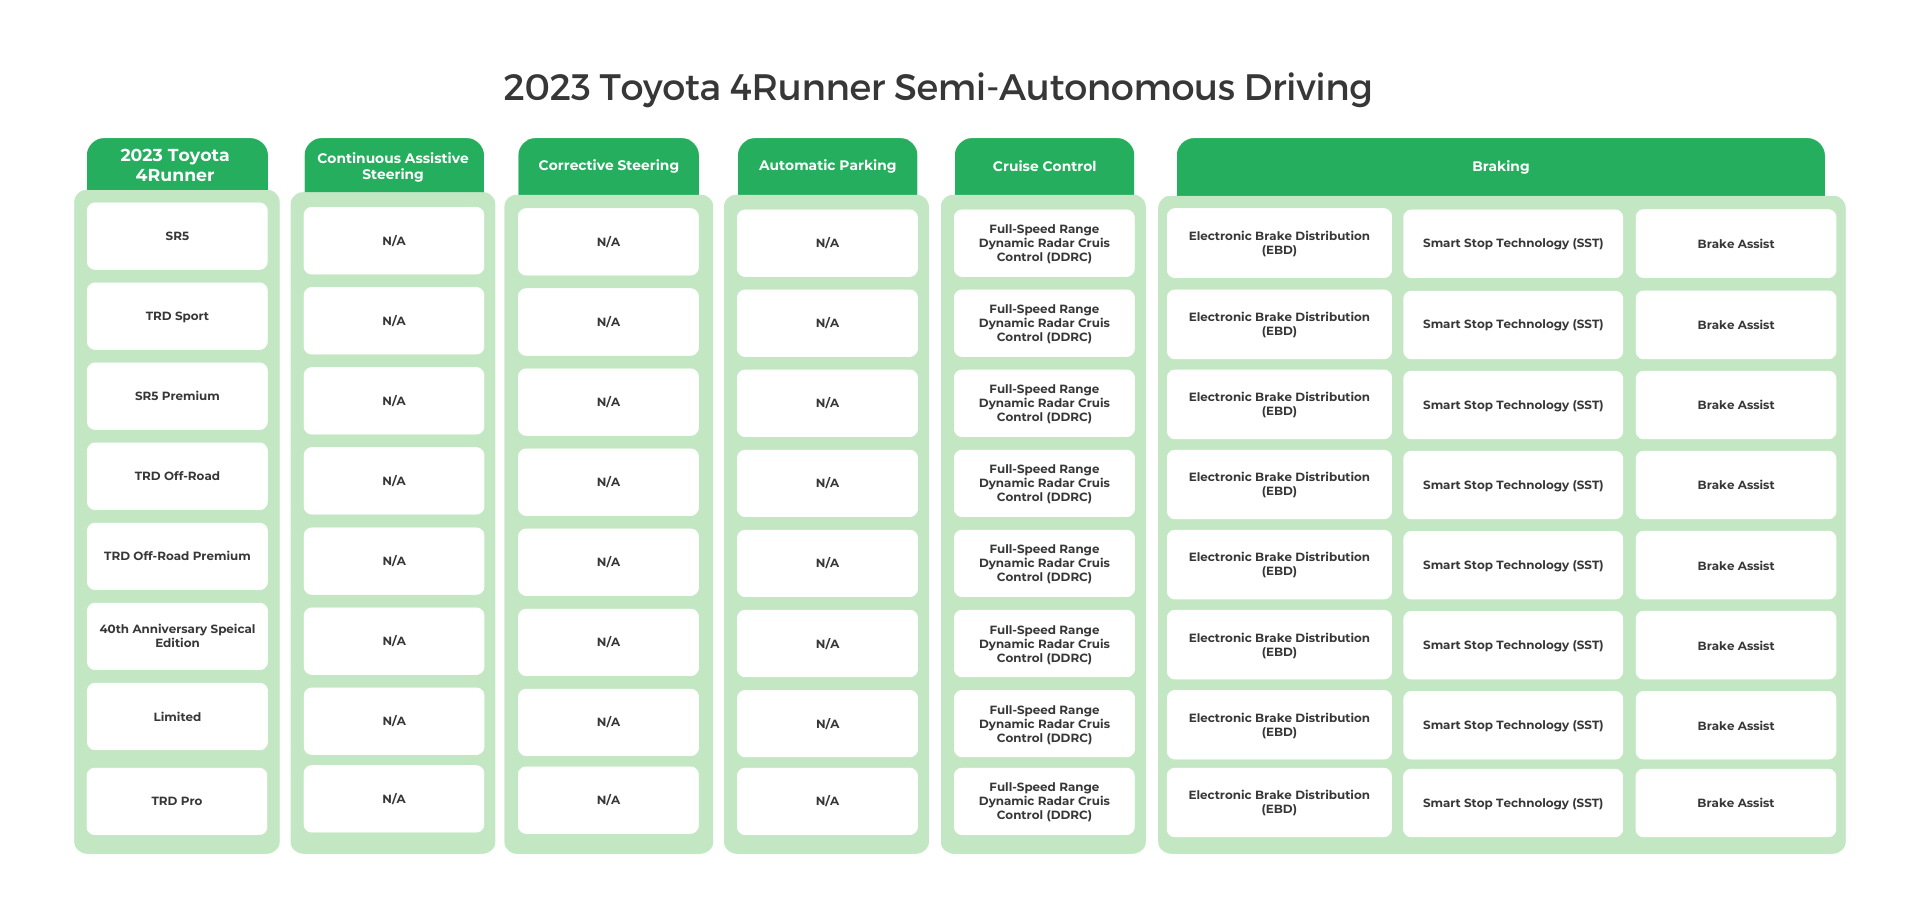 2023 Toyota 4Runner Semi-Autonomous Driving